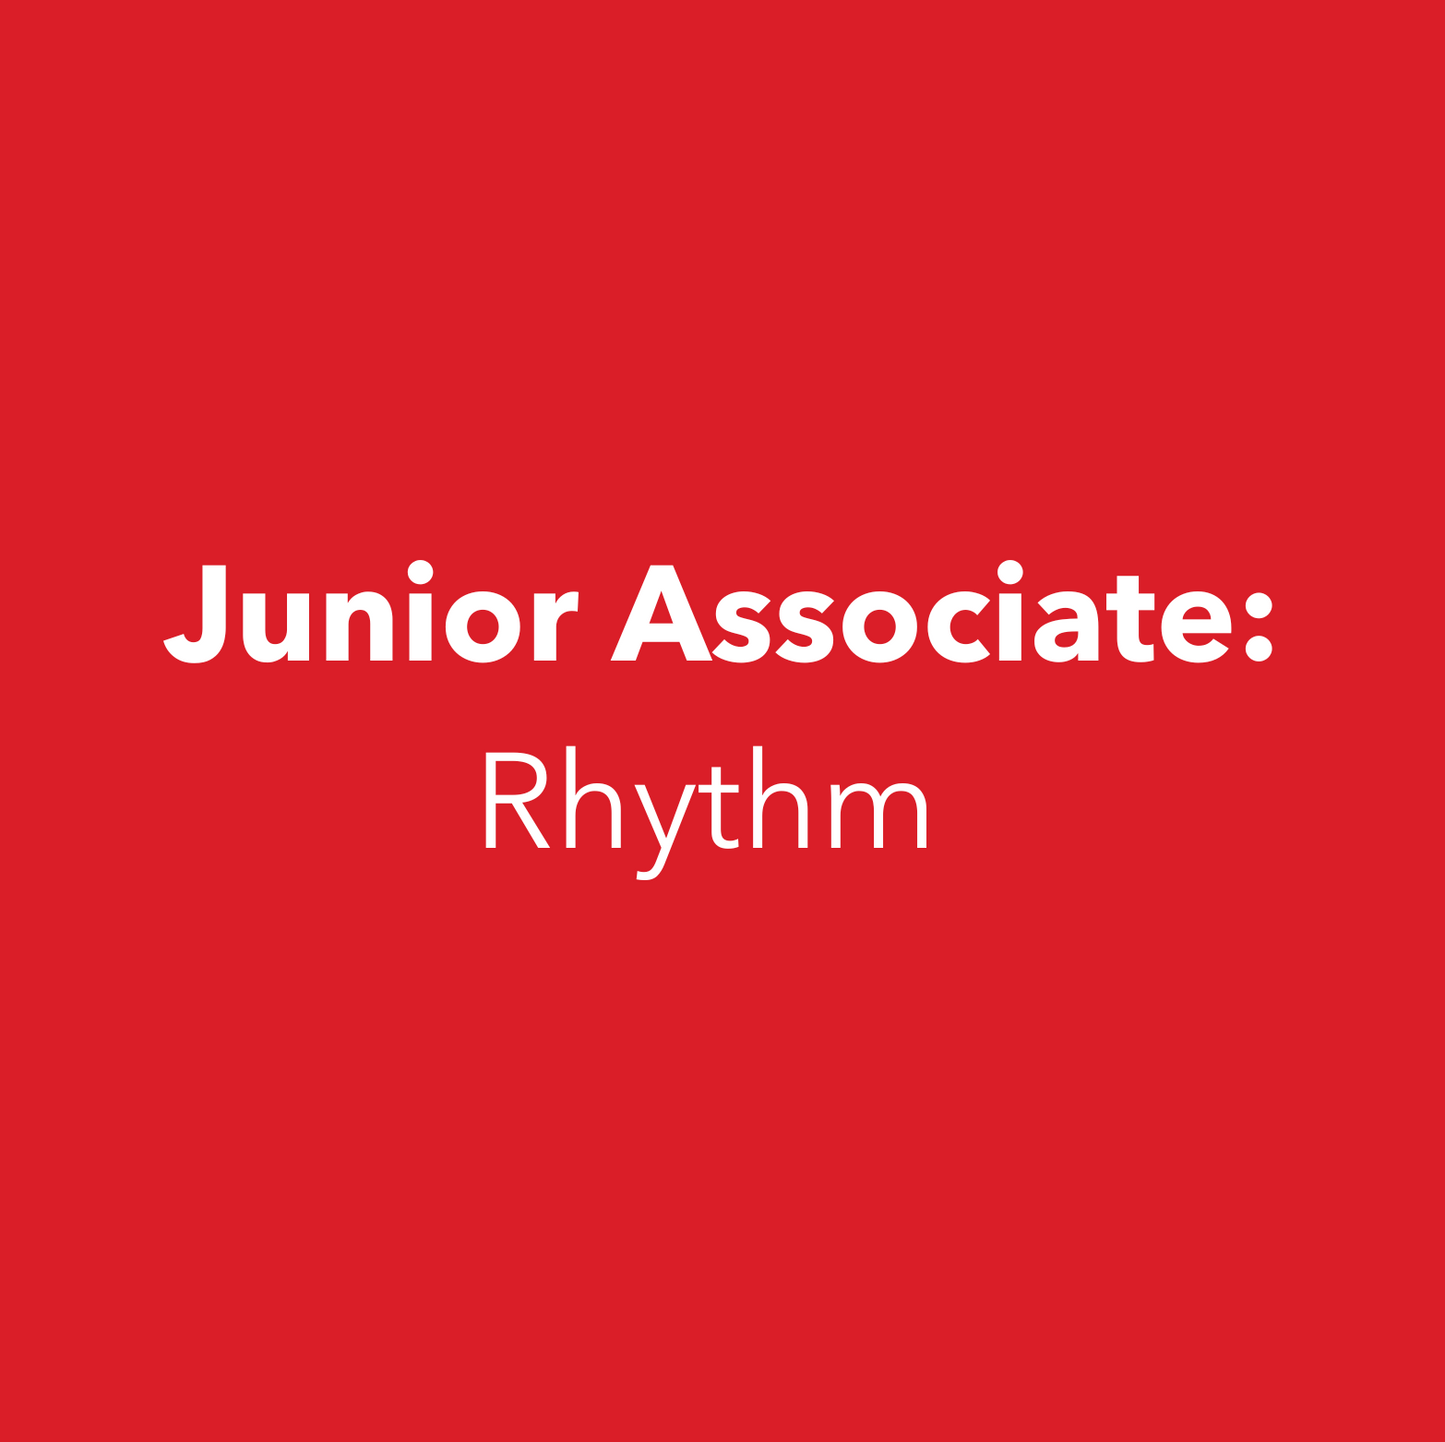 Junior Associate: Rhythm